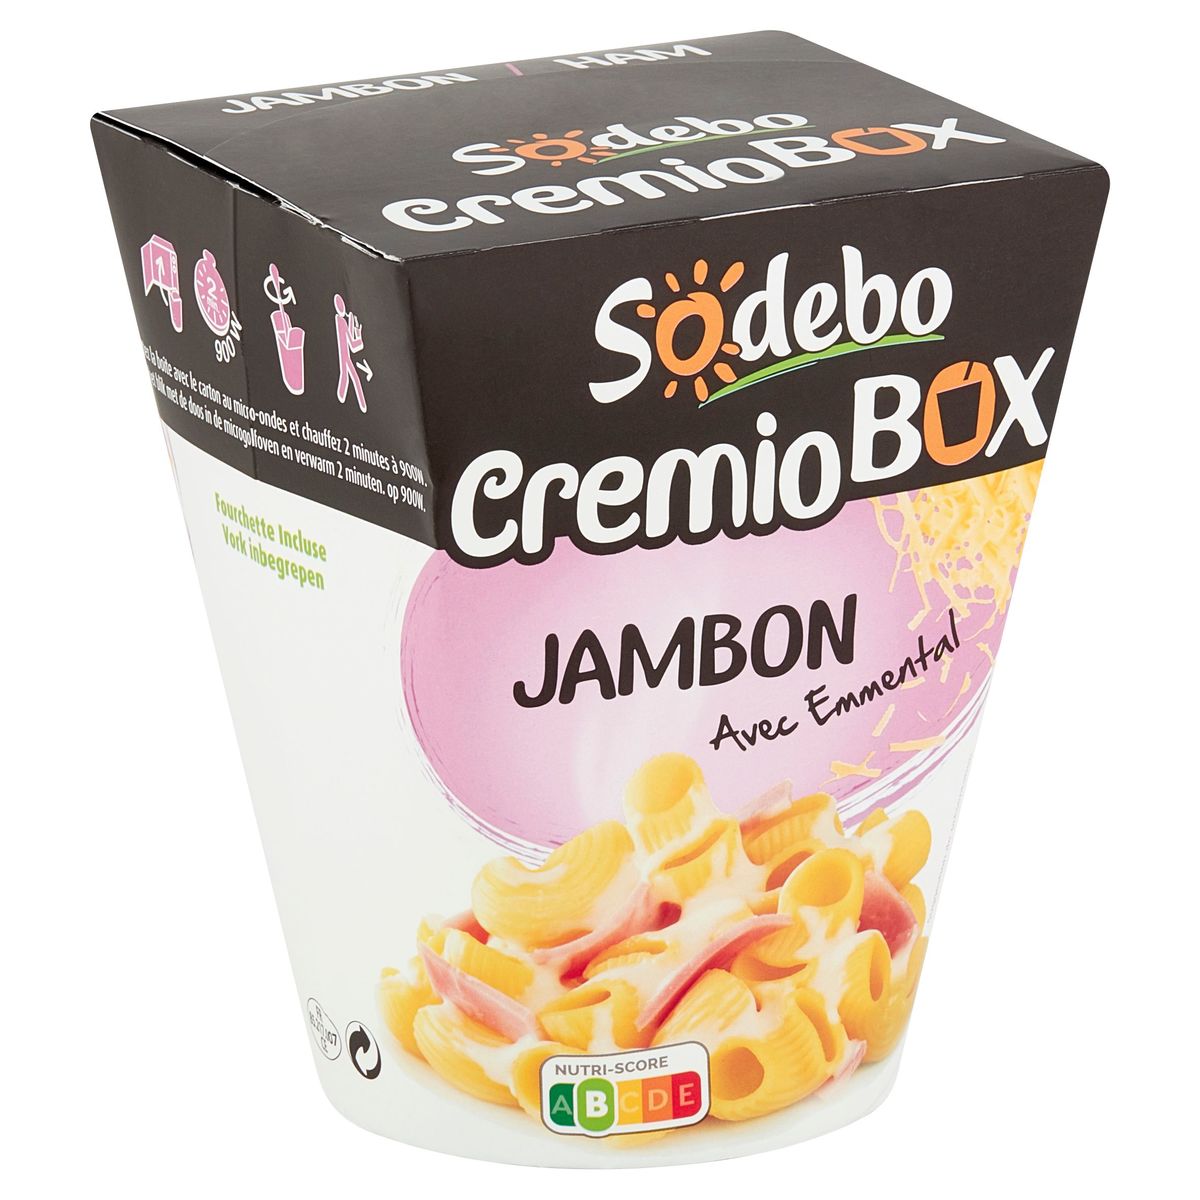 Sodebo CremioBox Jambon avec Emmental 280 g